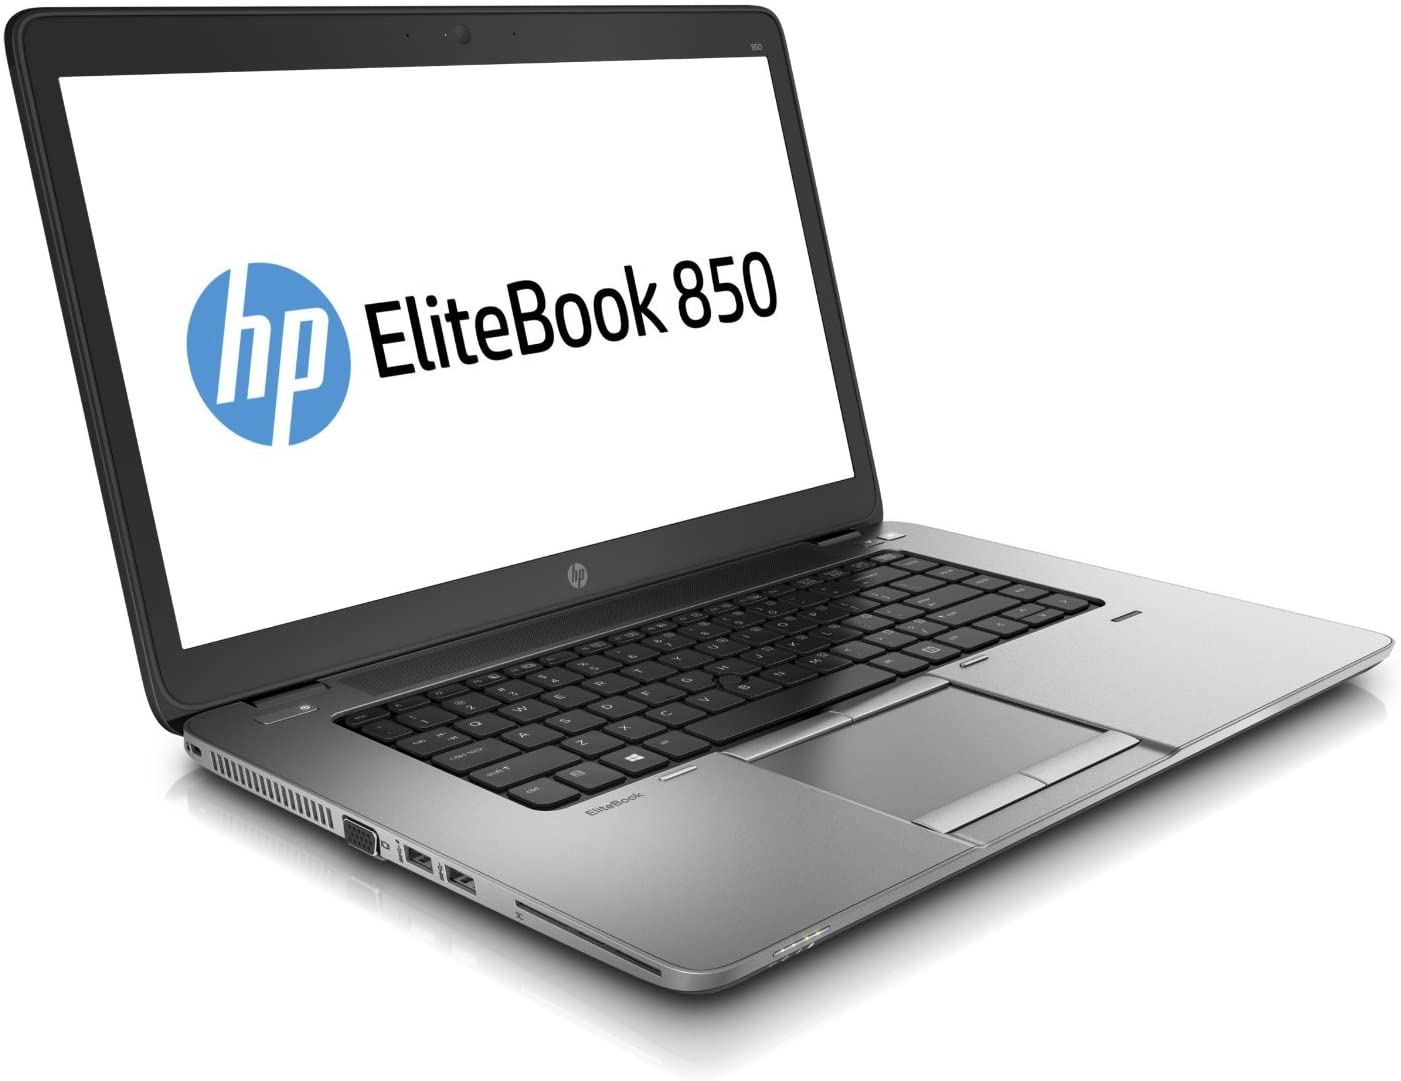 HP EliteBook 850 G2 15.6 Inch 5th gen Intel Core i7, 8GB RAM, 256GB SSD, Windows 8 Pro3